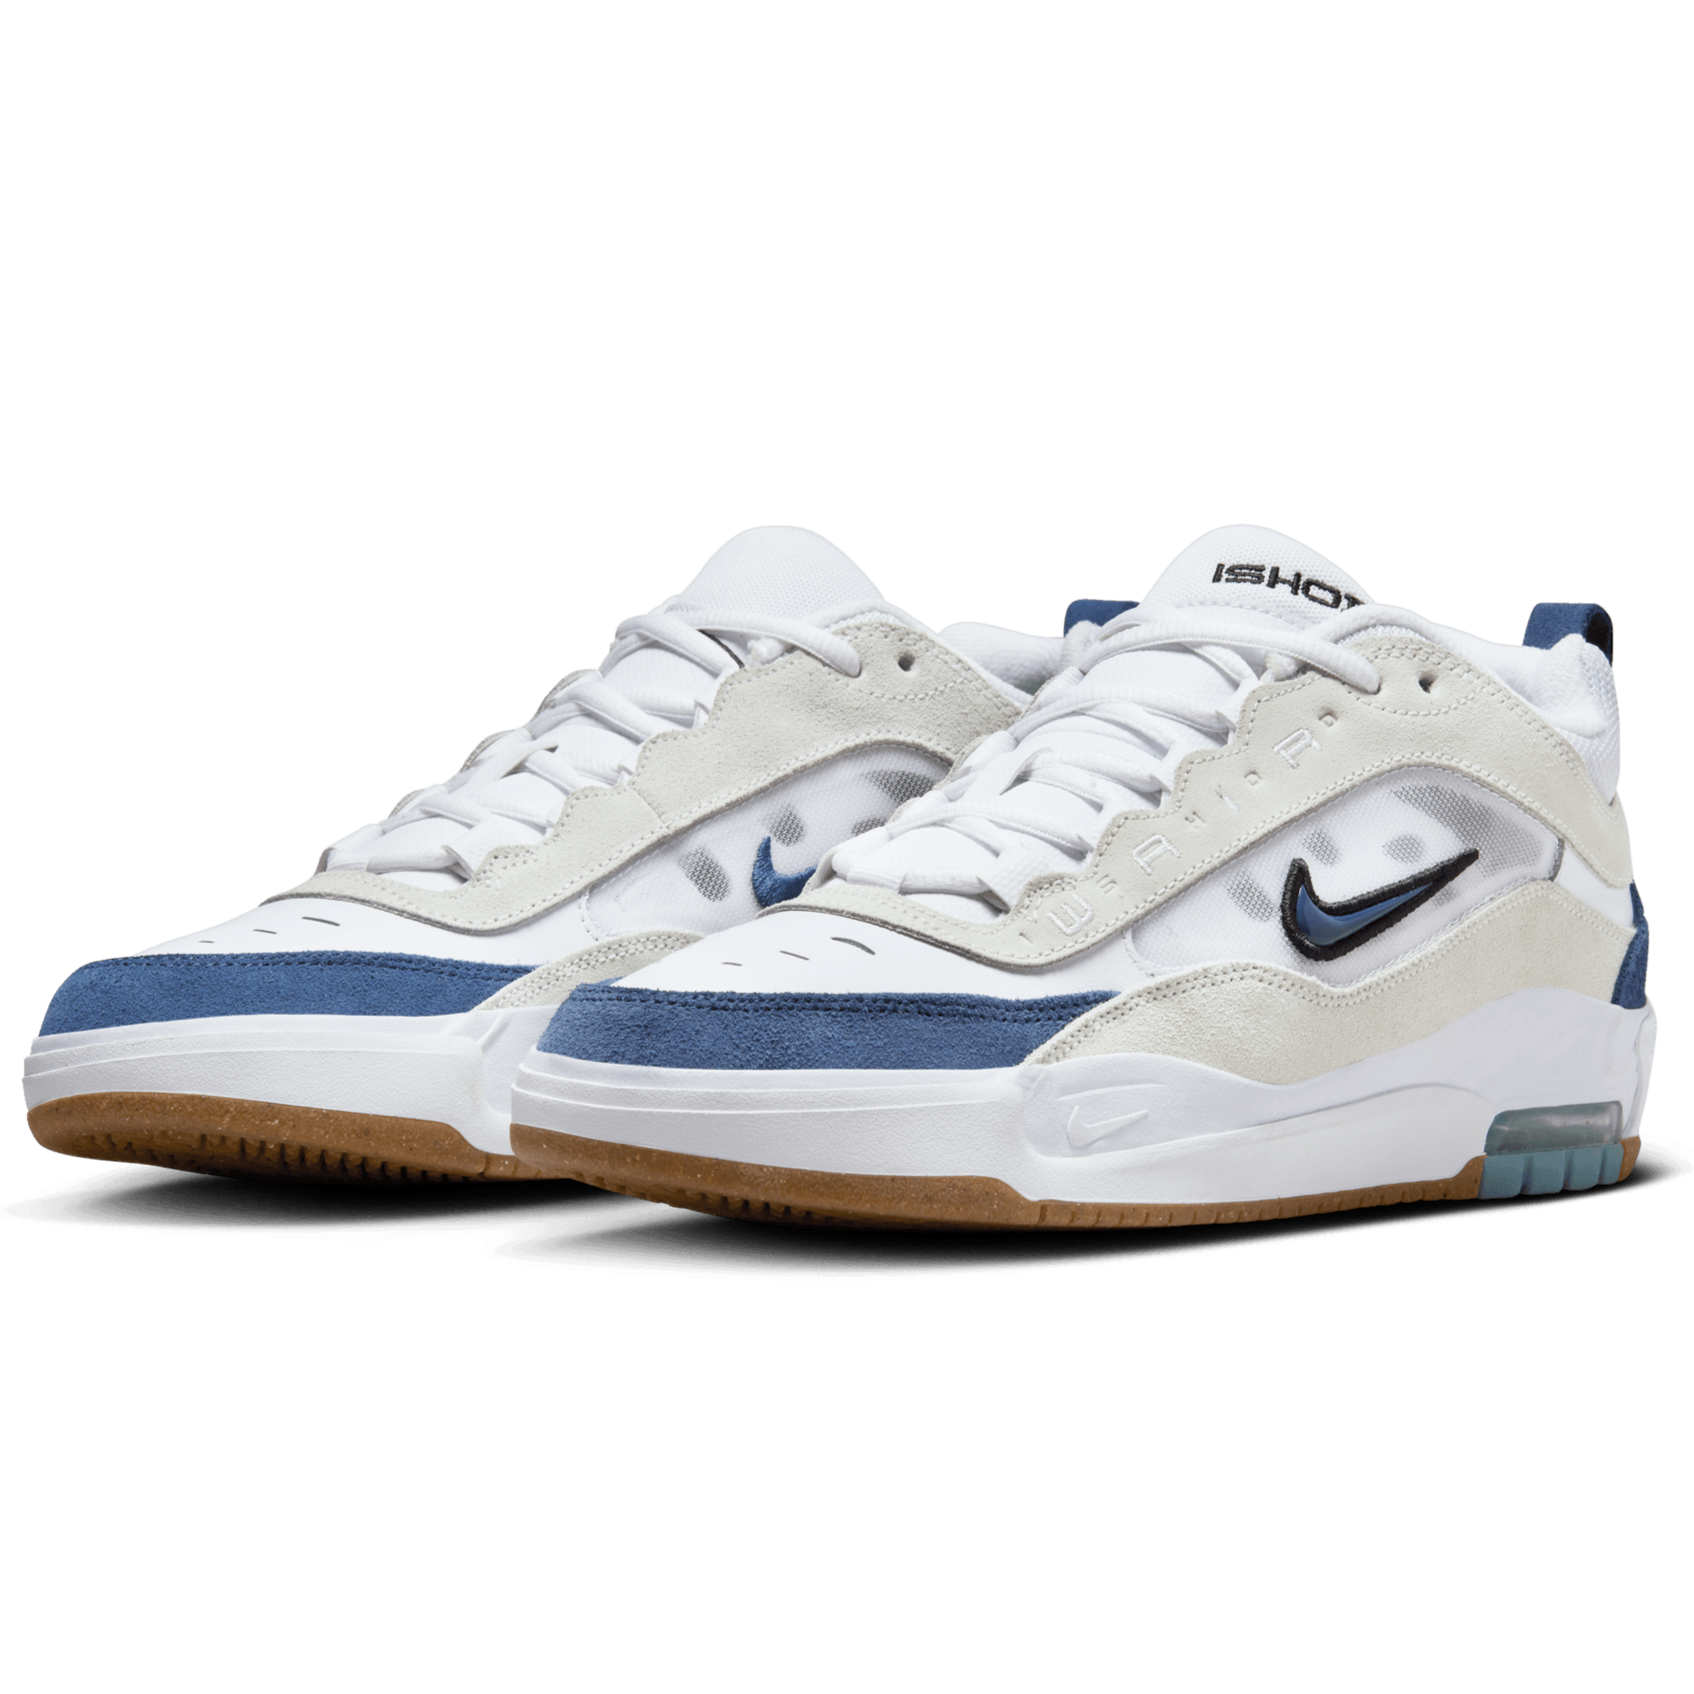 White/Navy Air Max Ishod 2 Nike SB Skate Shoe Front